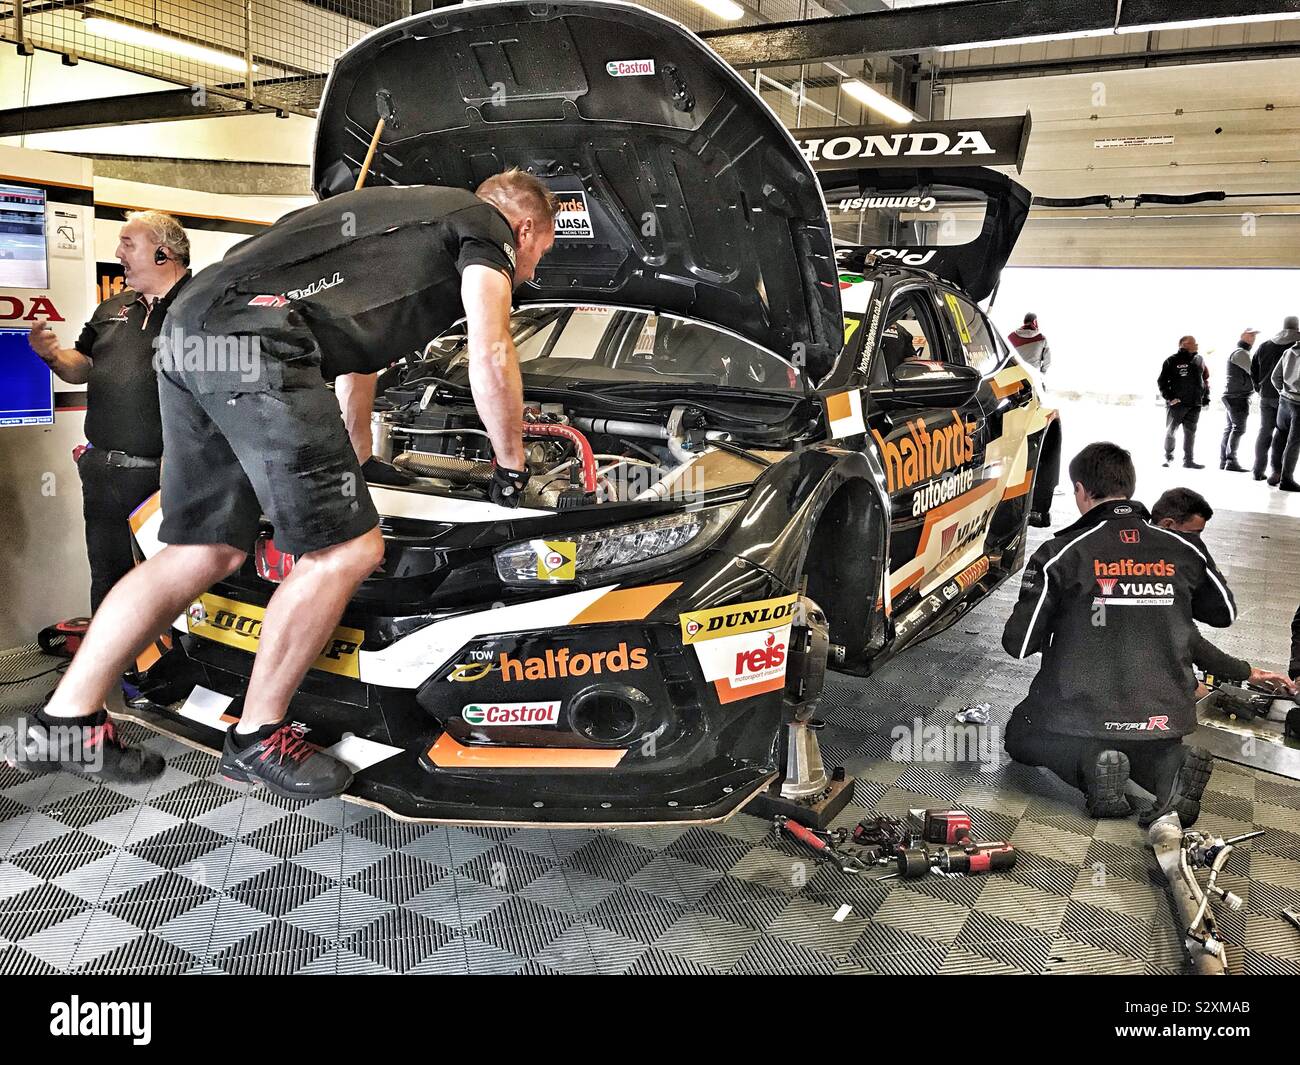 Dan Cammish Pit Garage At BTCC Silverstone 2019 With Mechanics Working On His Car Stock Photo